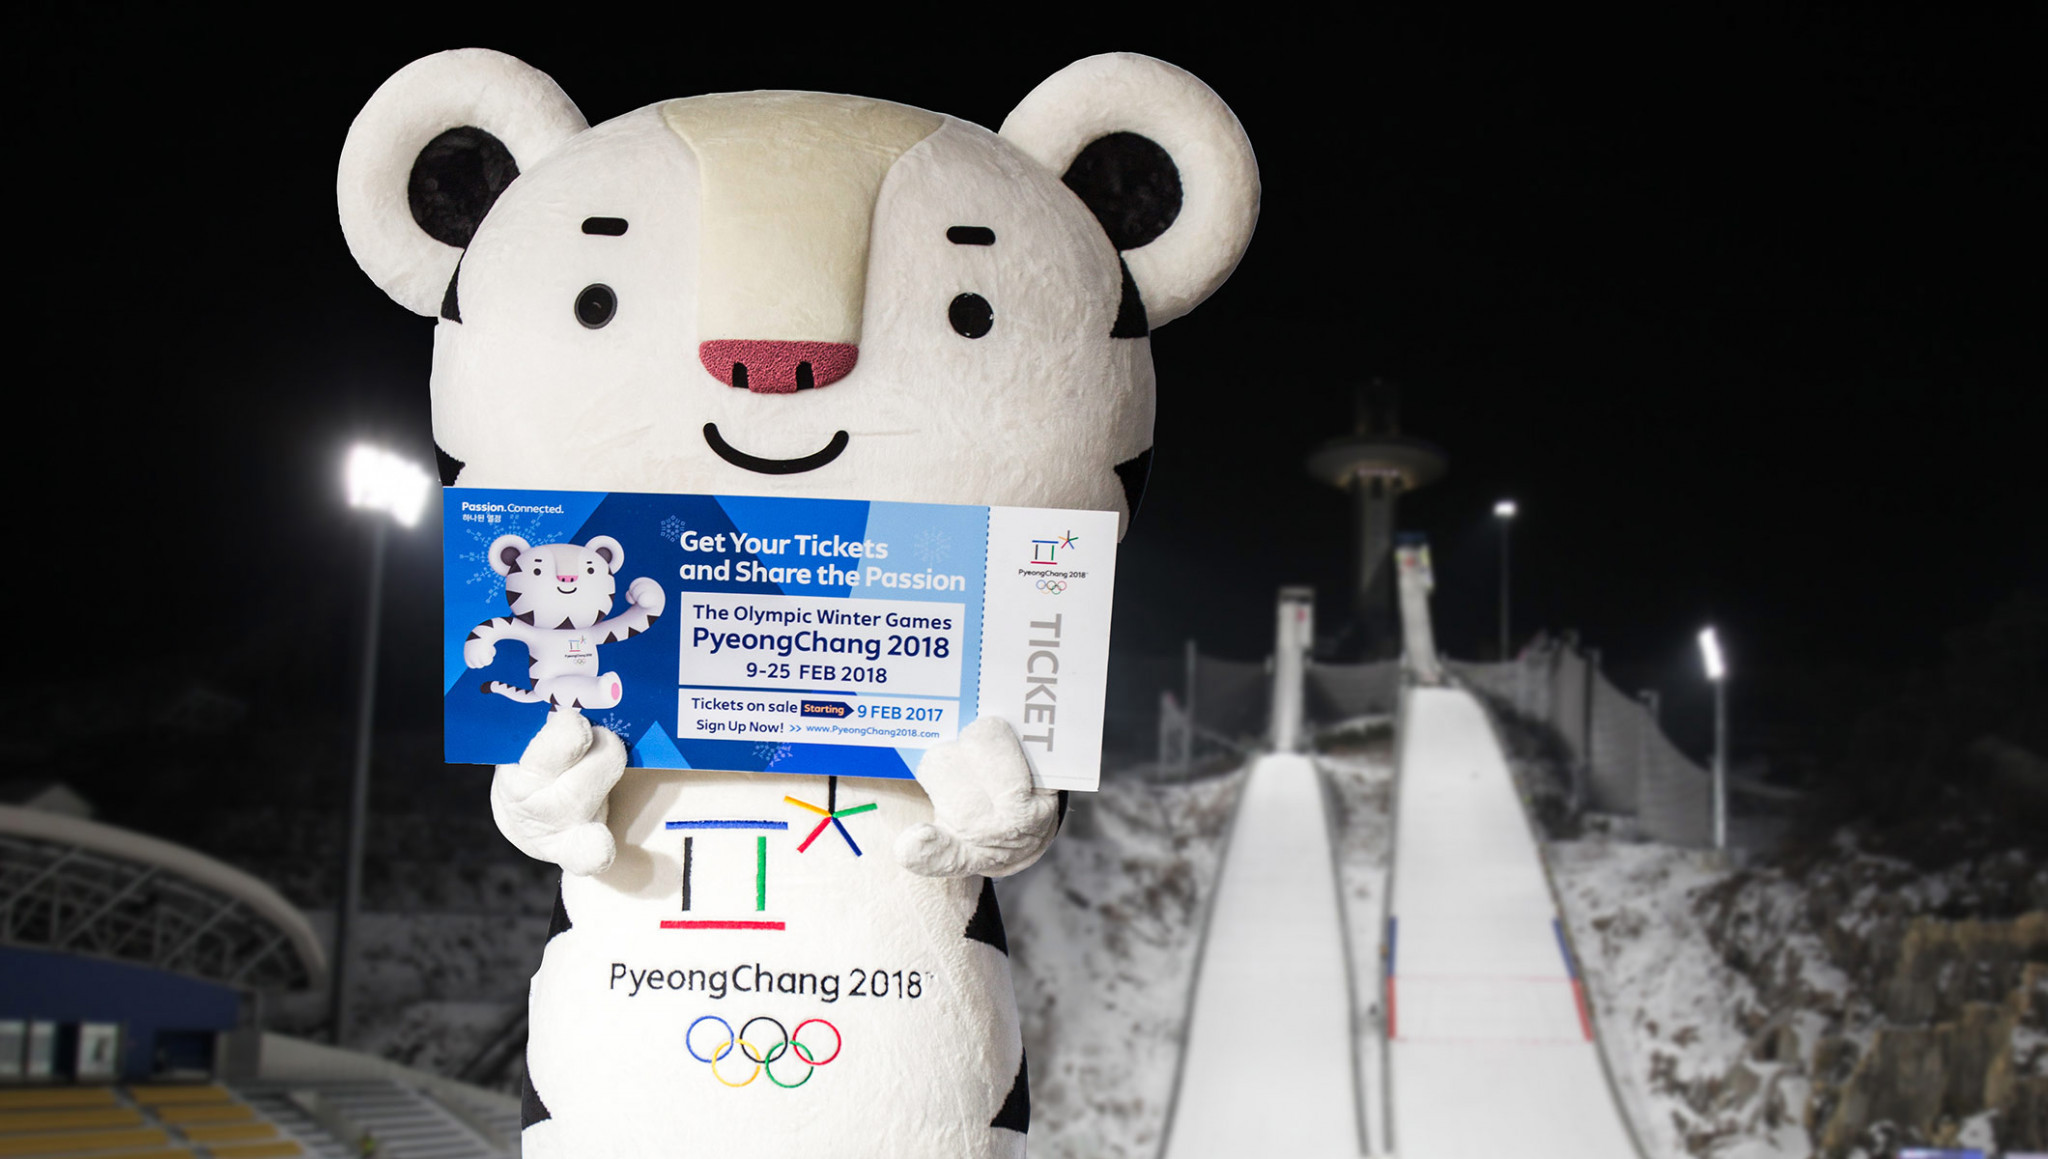 Ticket Sales Remain Low for Pyeongchang 2018 Olympics, Paralympics